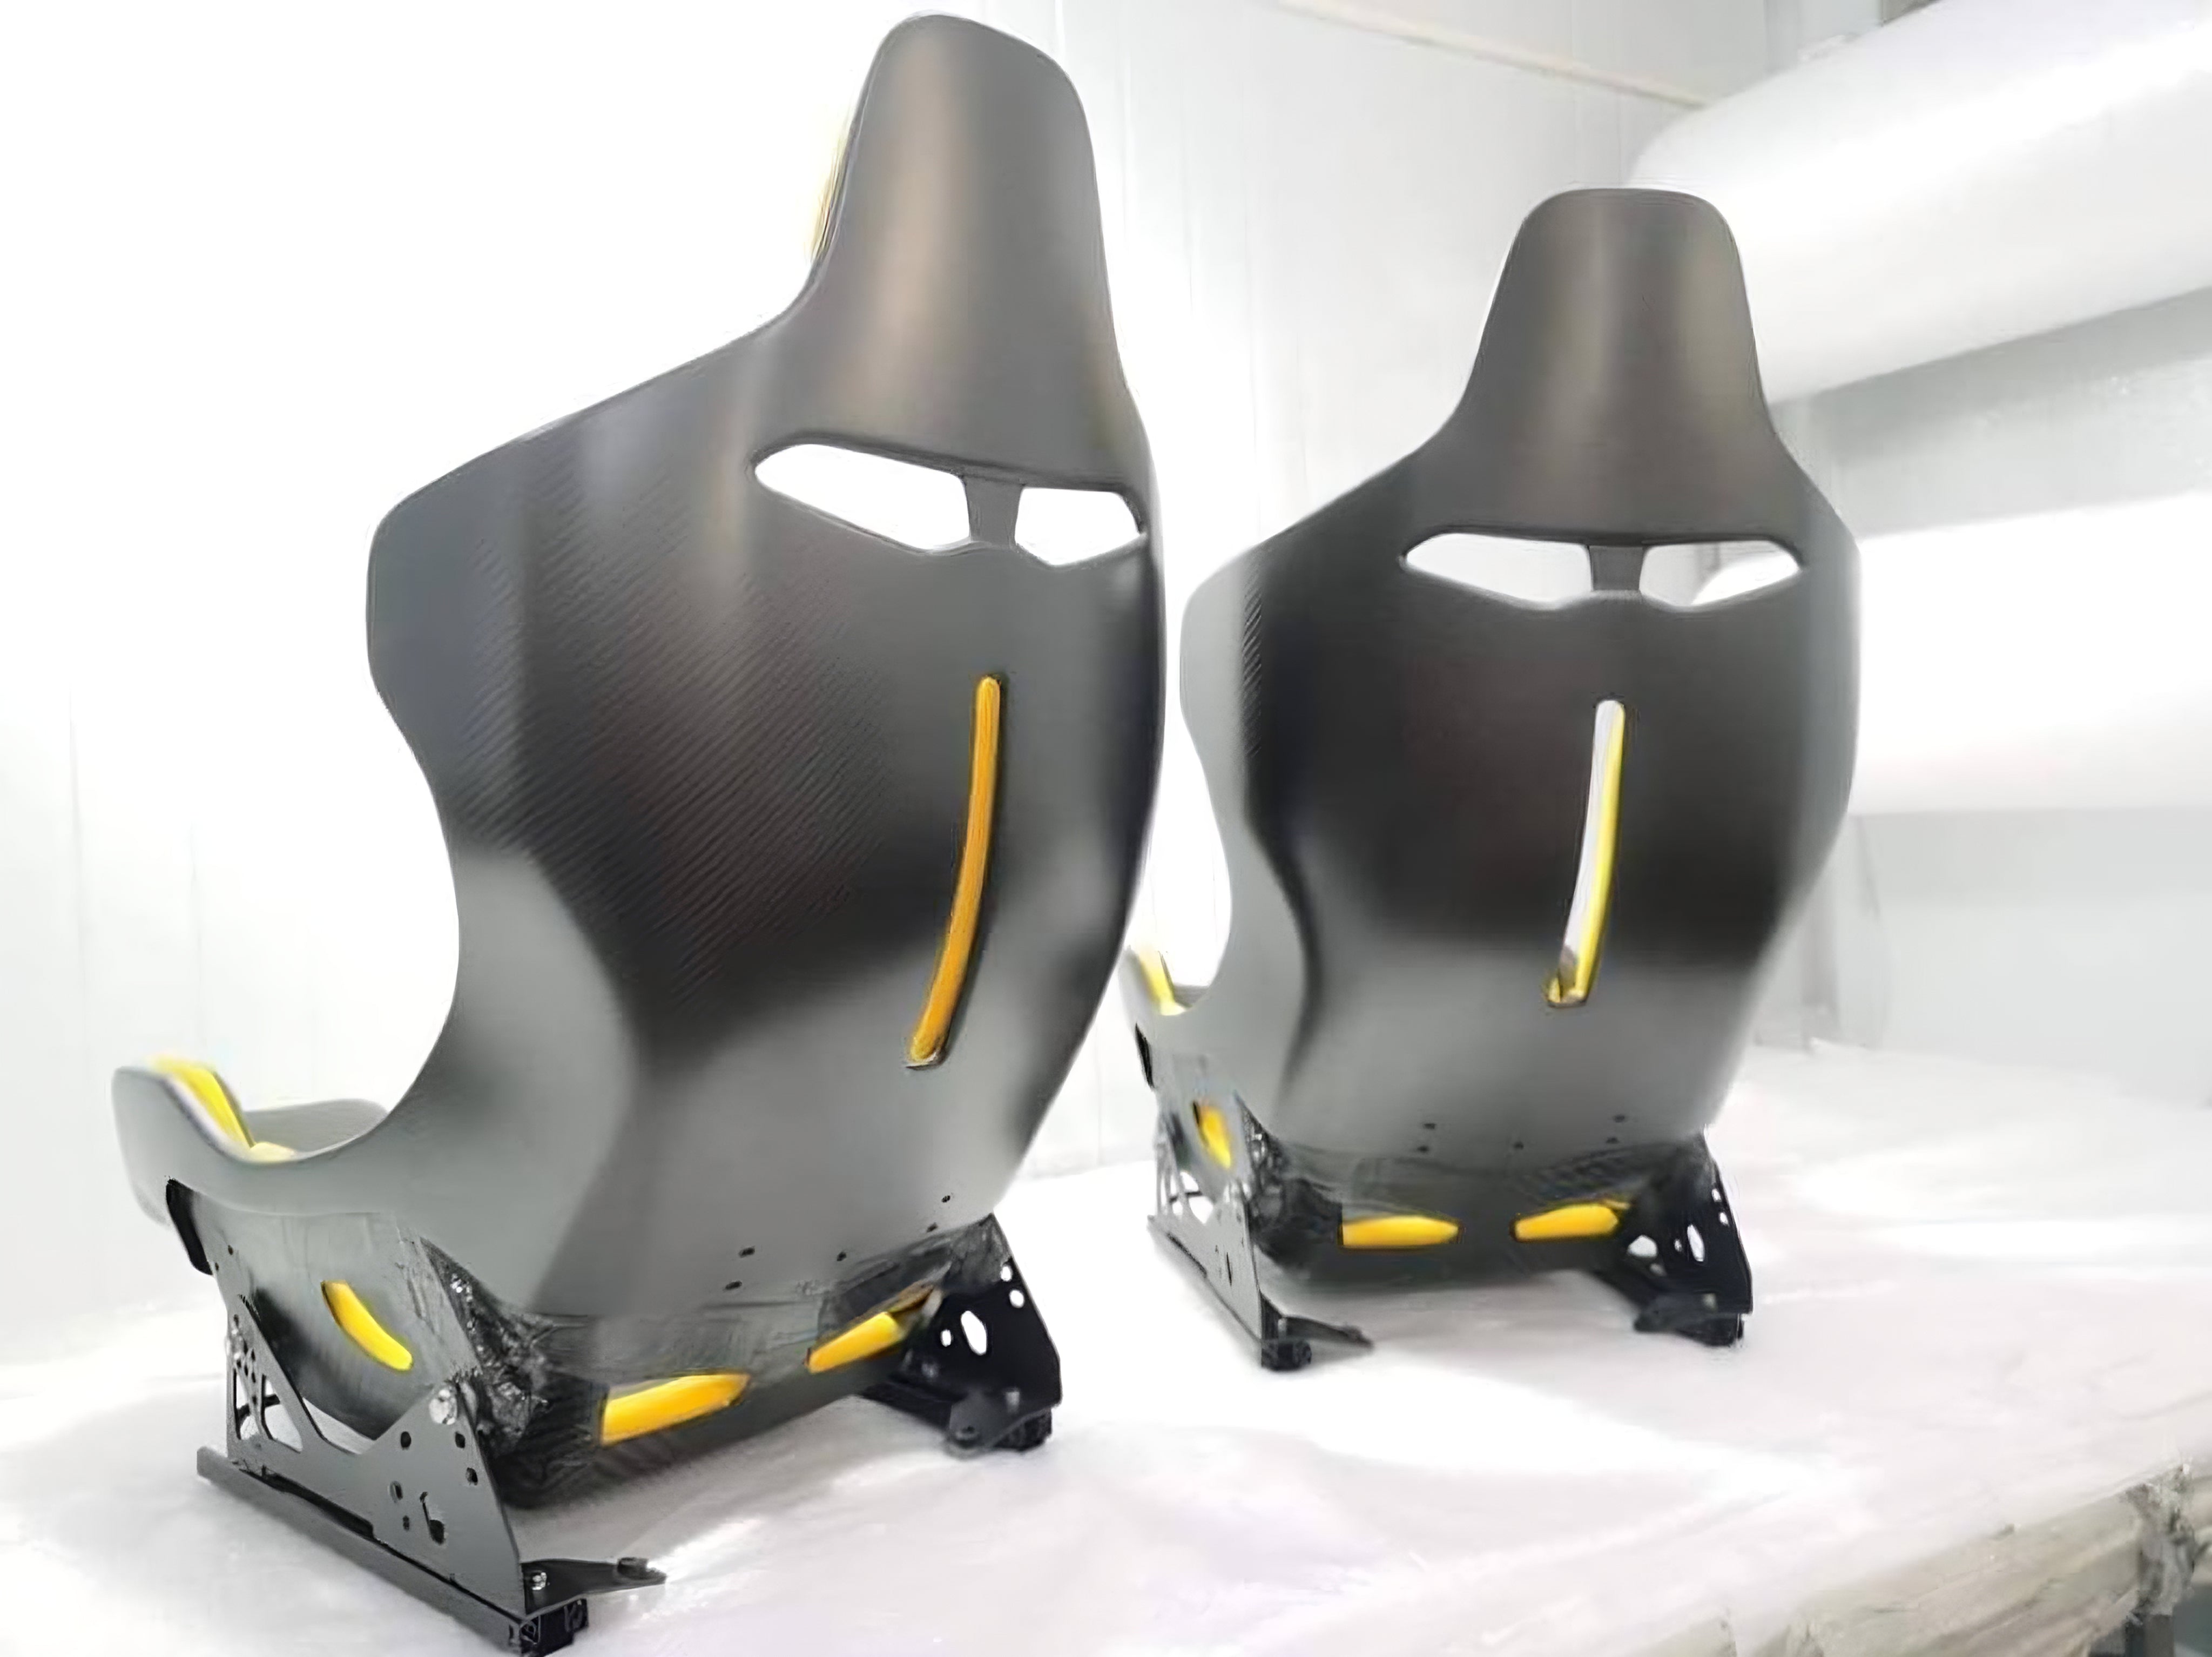 McLaren Senna Style carbon seats 